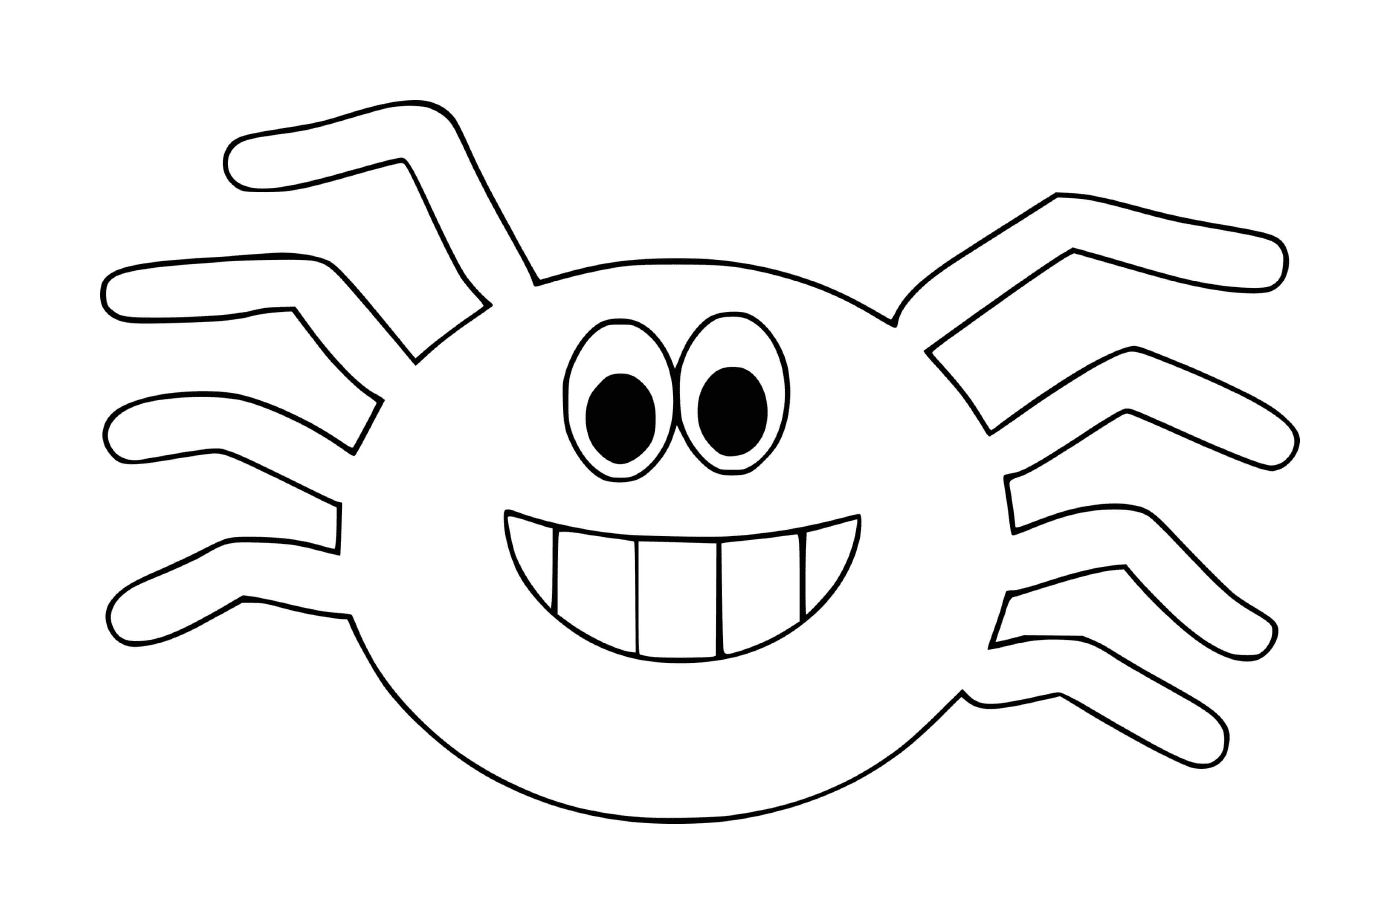  A smiling crab 